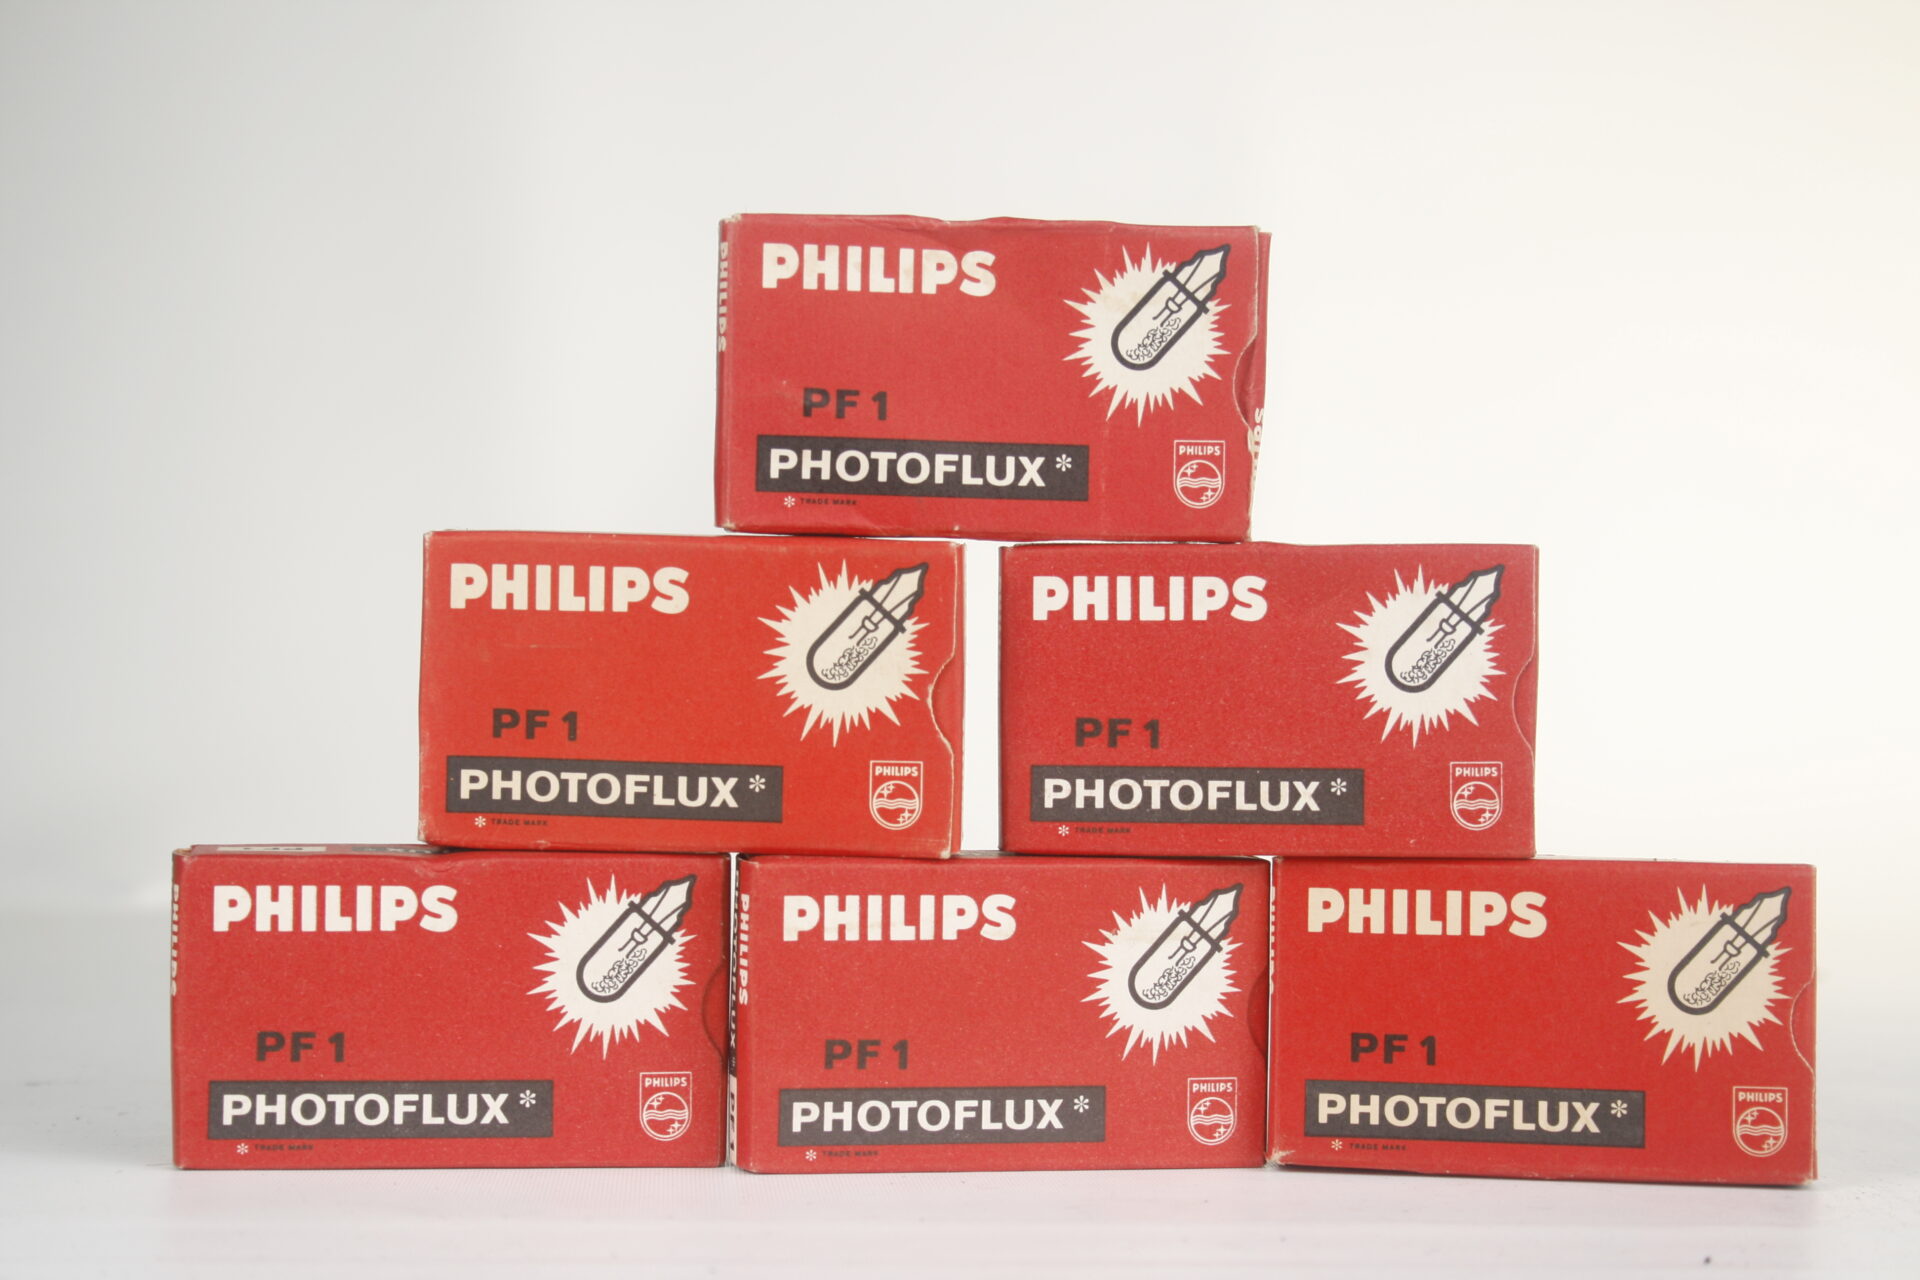 Philips Photoflux PF1 flitslampjes